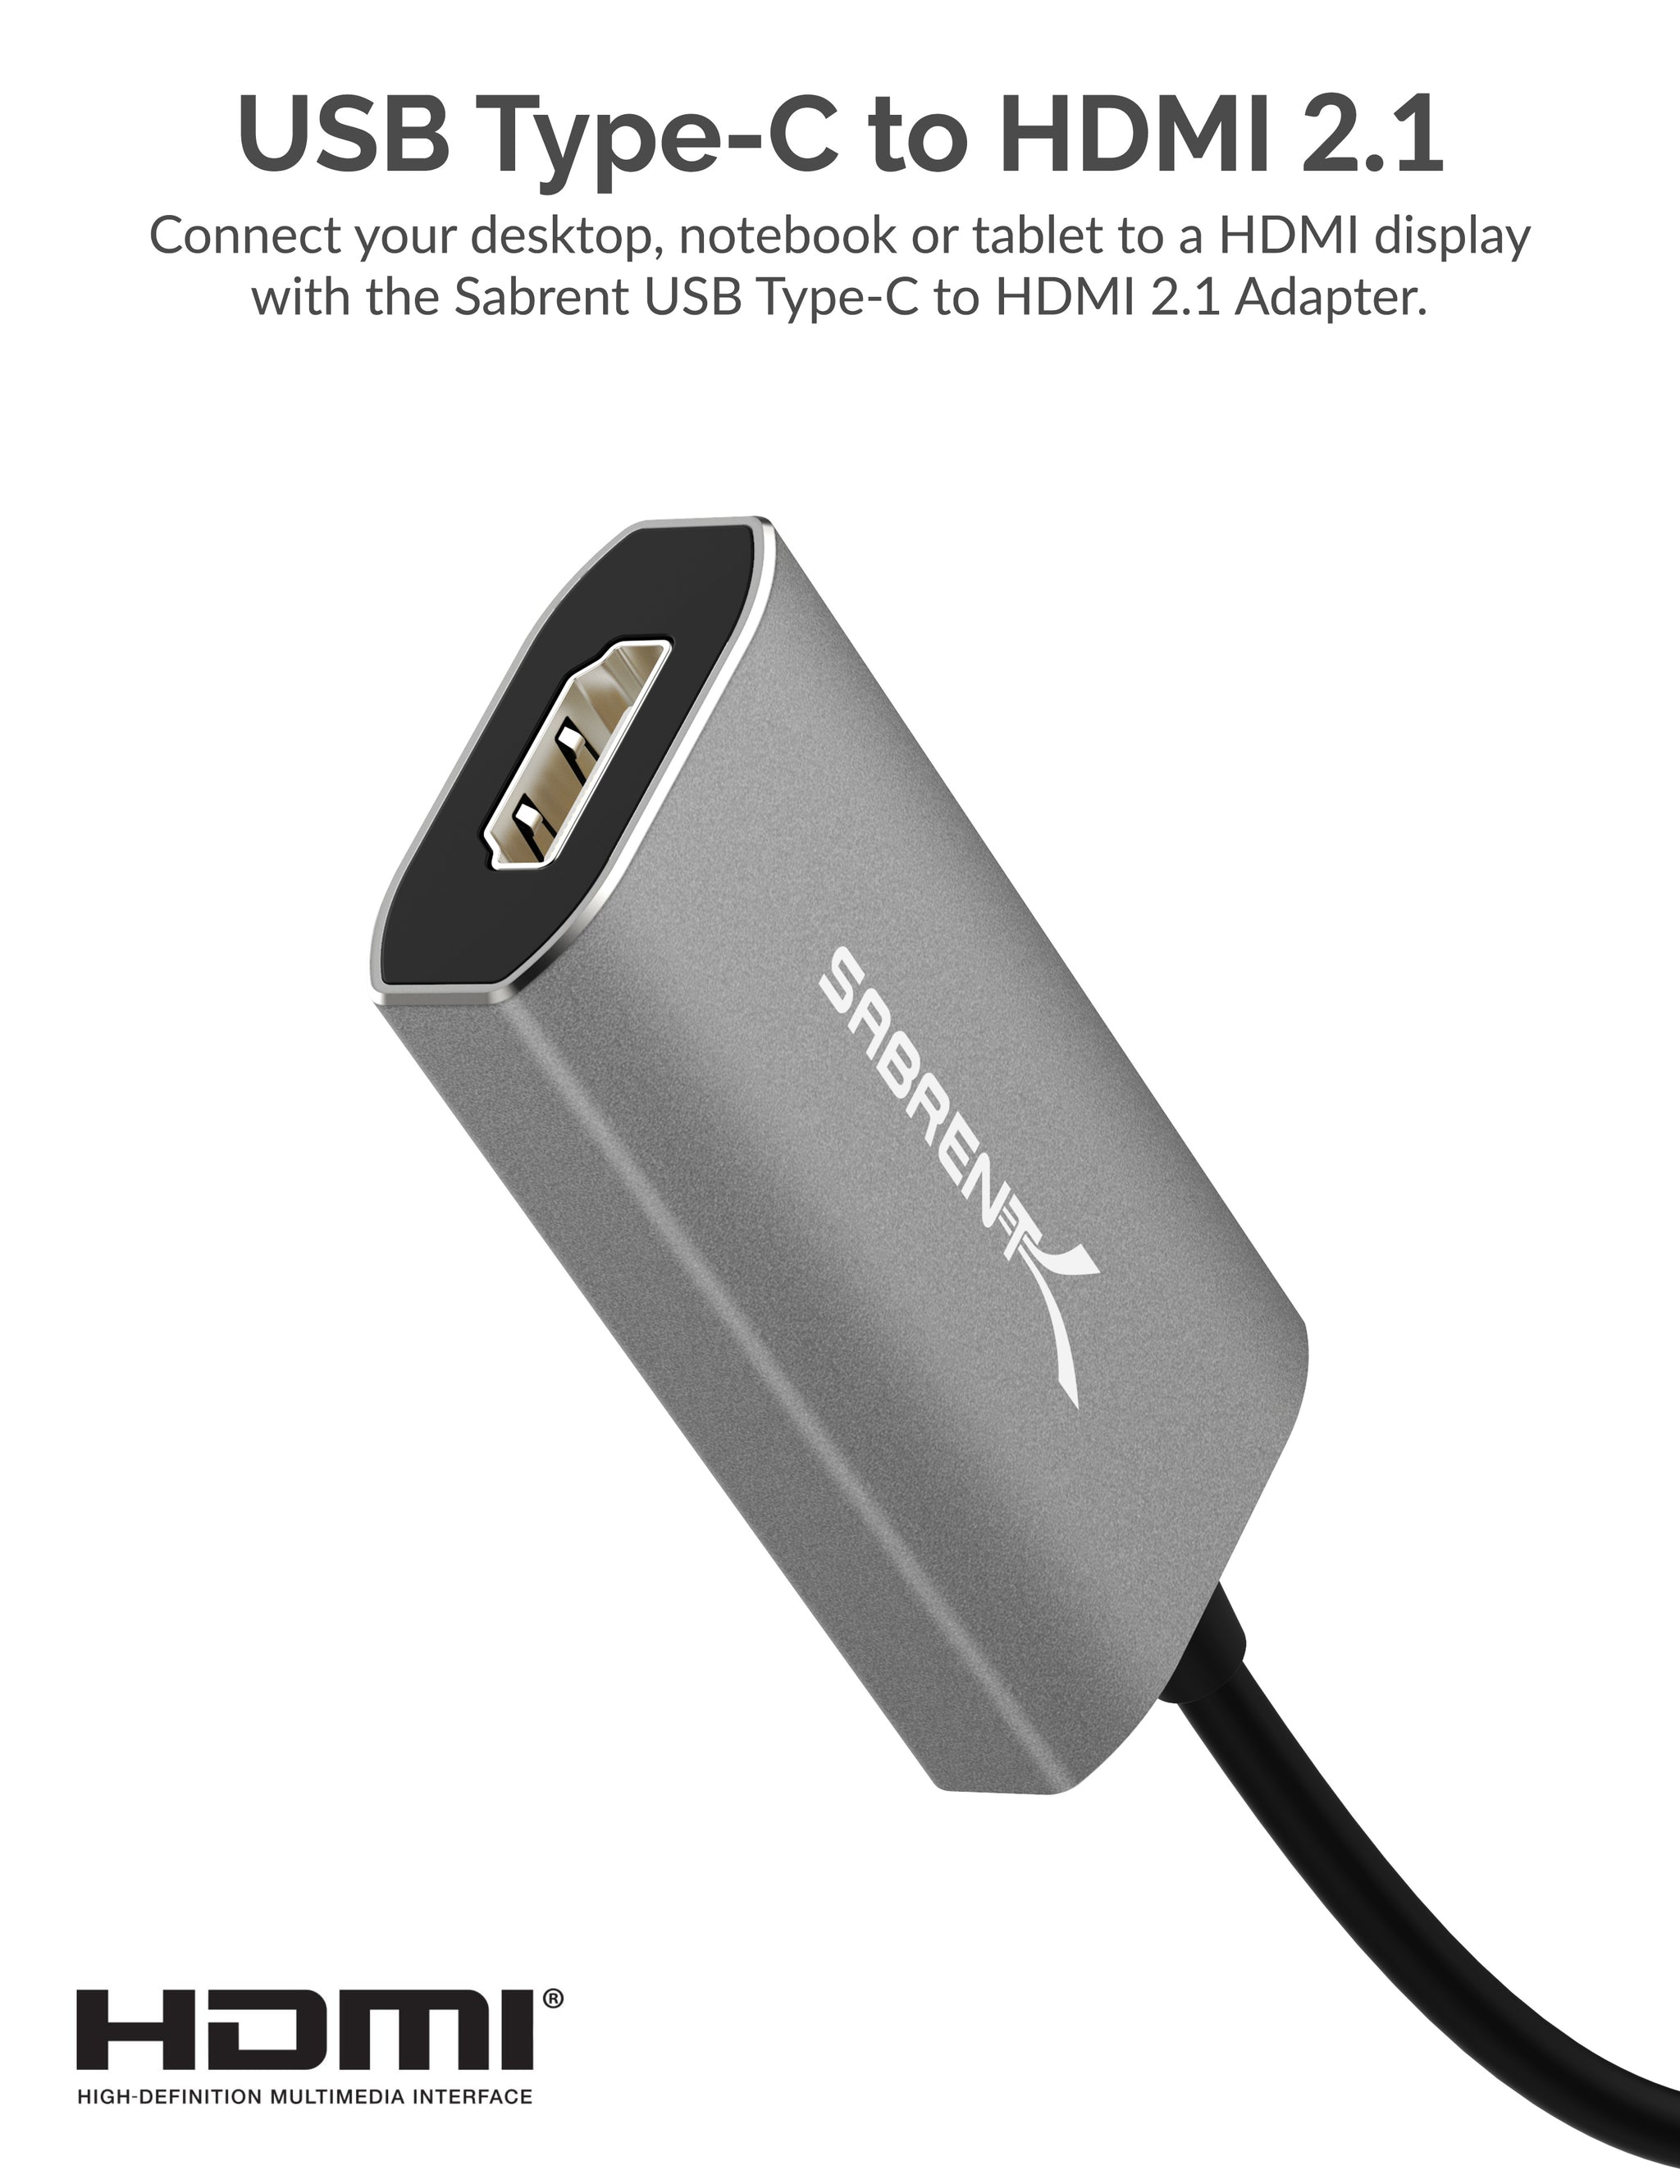 USB HDMI 2.1 Adapter - Sabrent